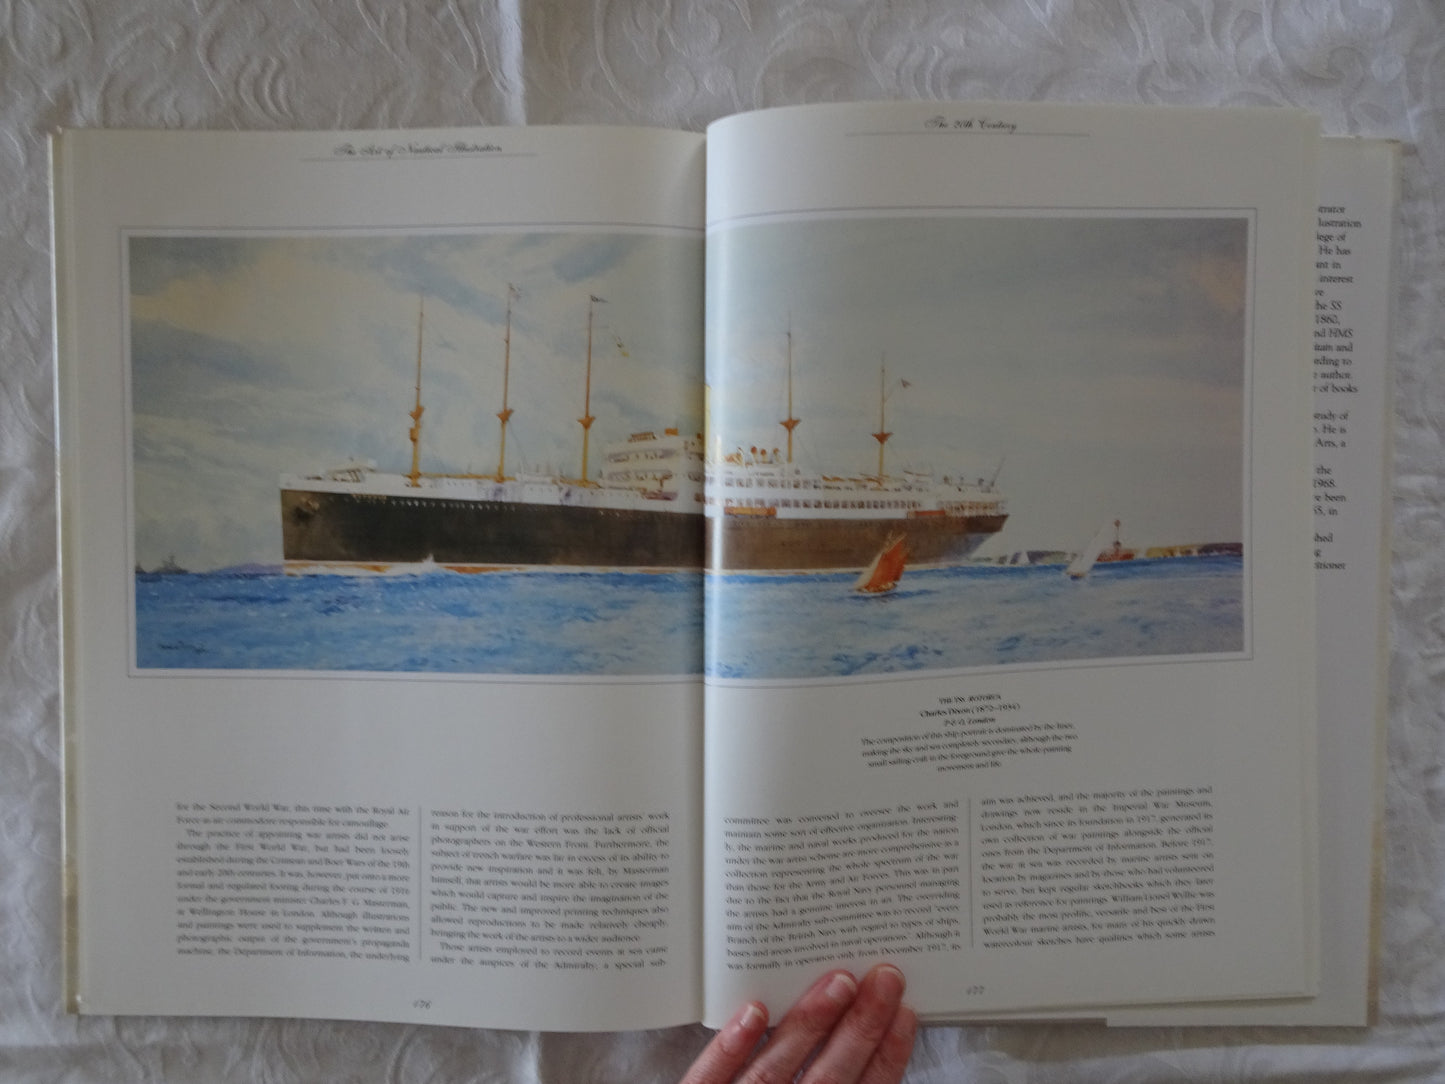 The Art of Nautical Illustration by Michael E. Leek